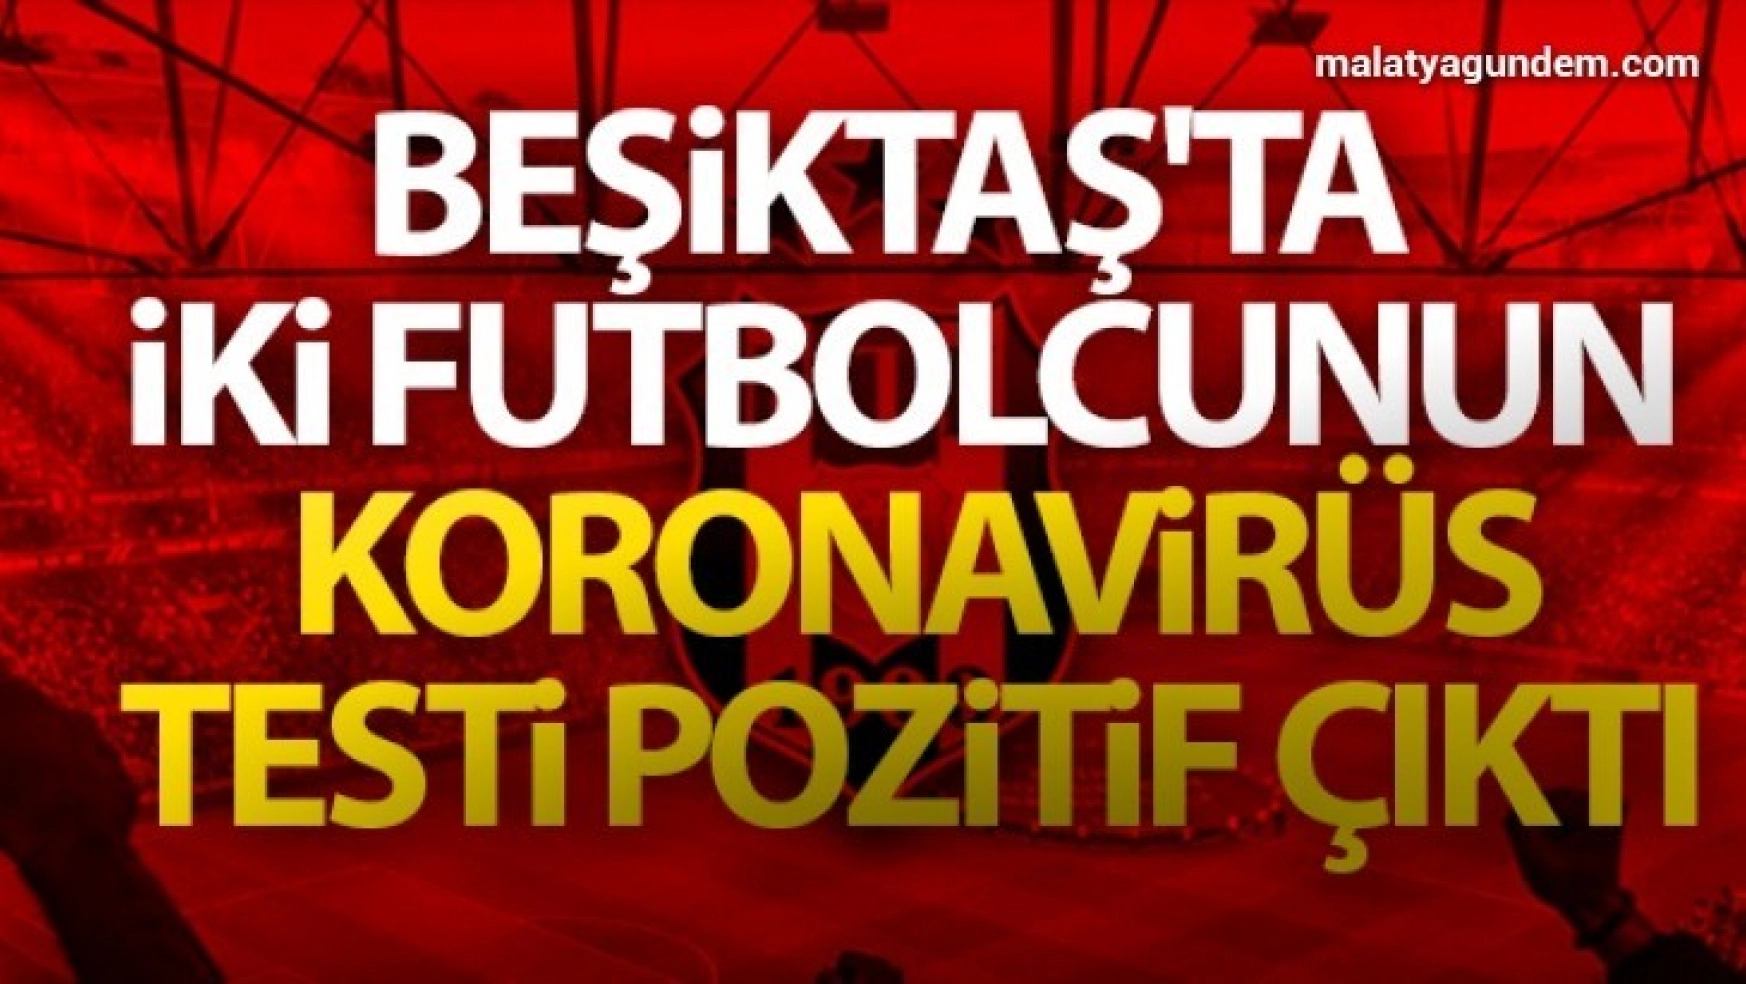 Beşiktaş'ta iki futbolcunun koronavirüs testi pozitif çıktı